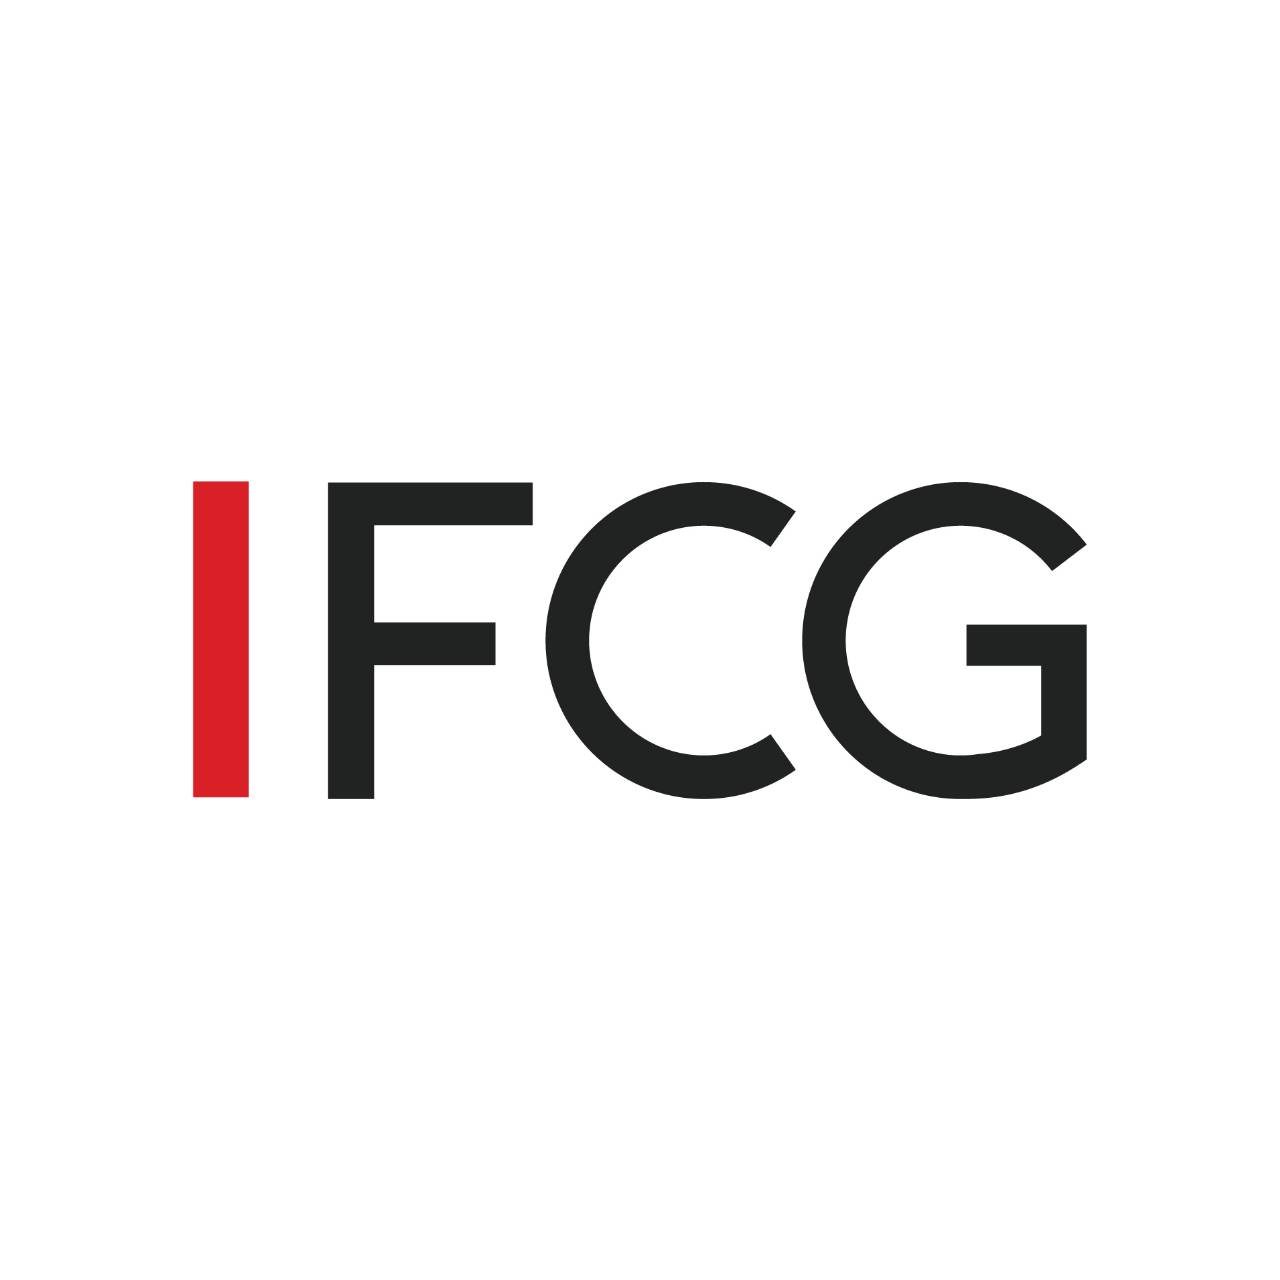 IFCG Public Company Limited